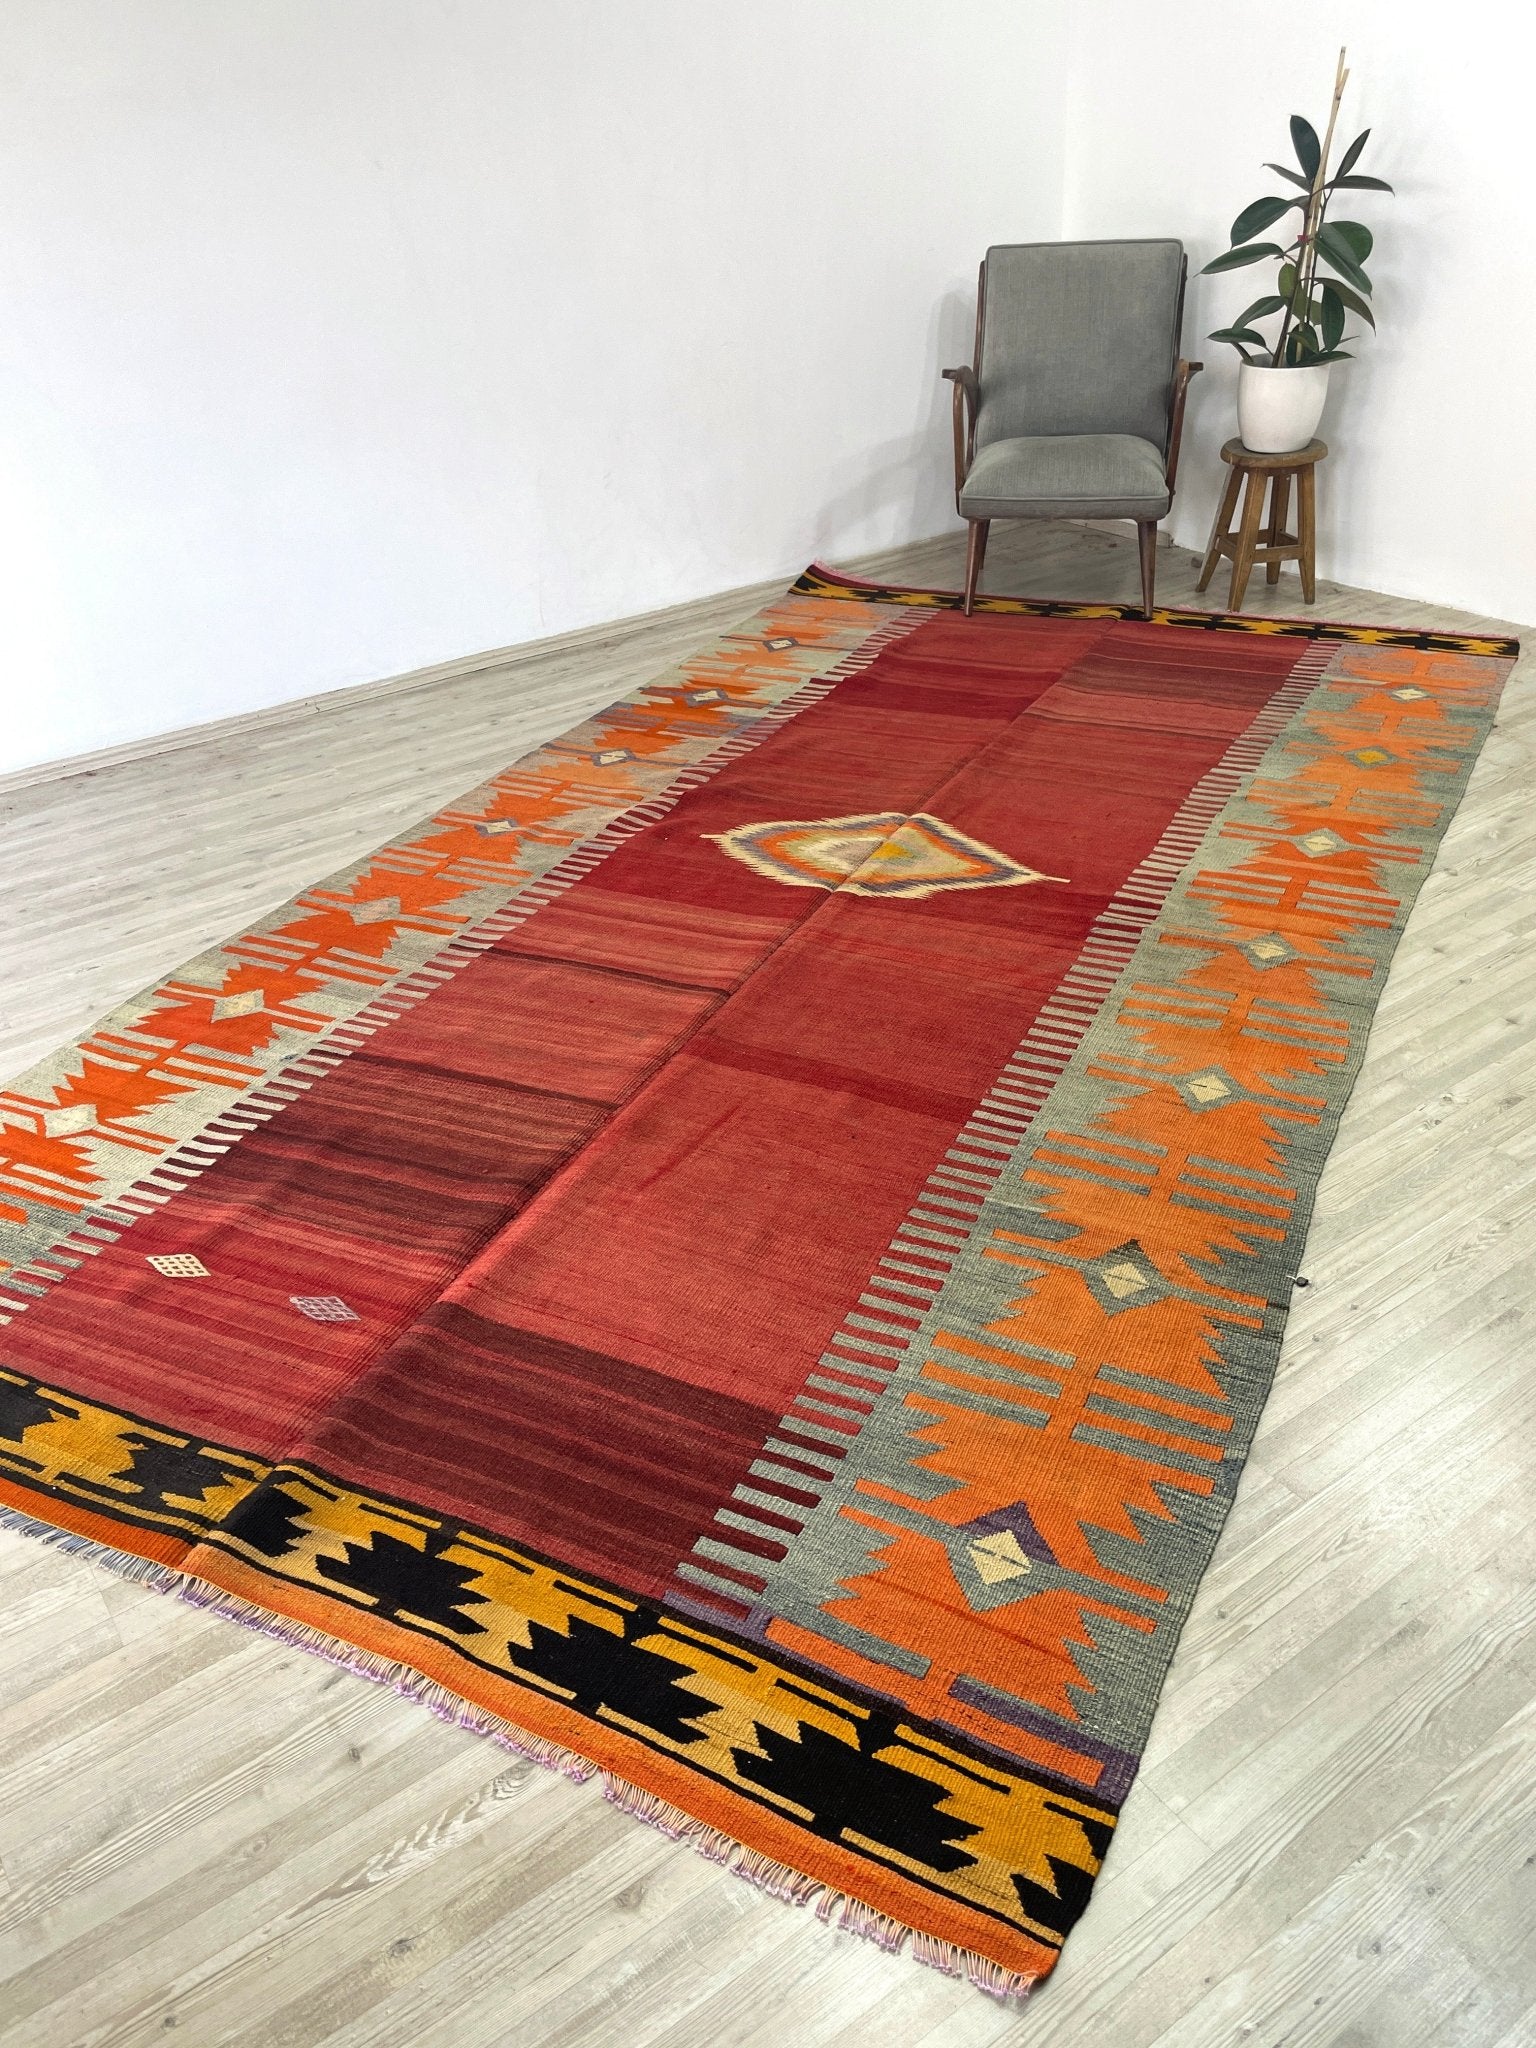 rug shop san francisco mut kilim turkish rug shop online bay area palo alto berkeley